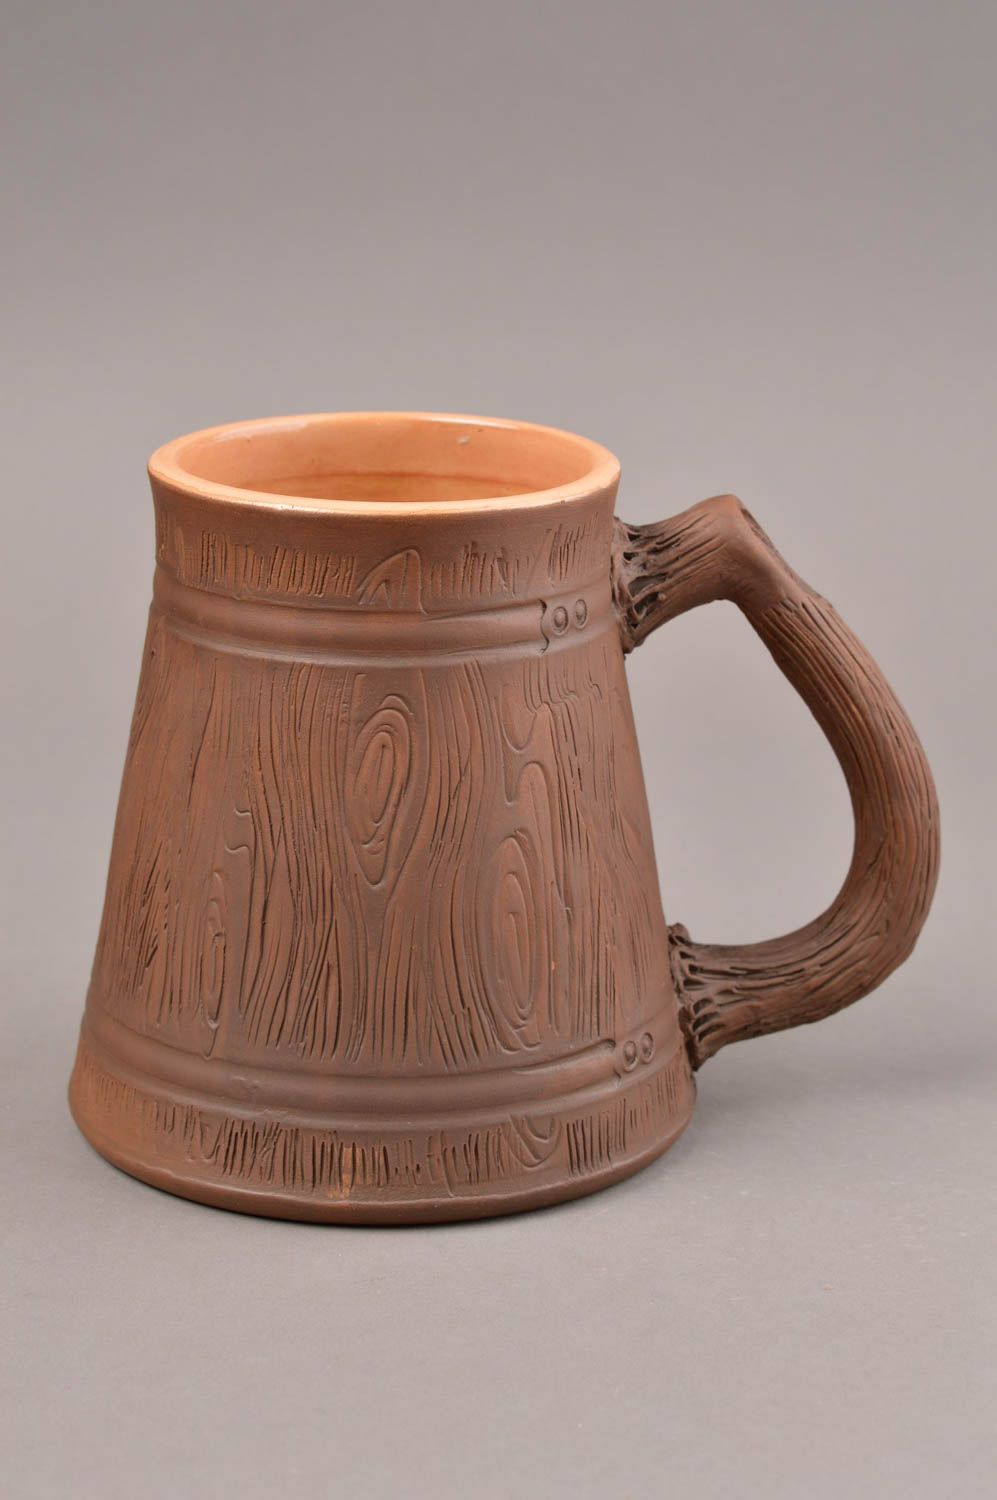 16 oz ceramic large clay drinking mug 1,26 lb photo 8